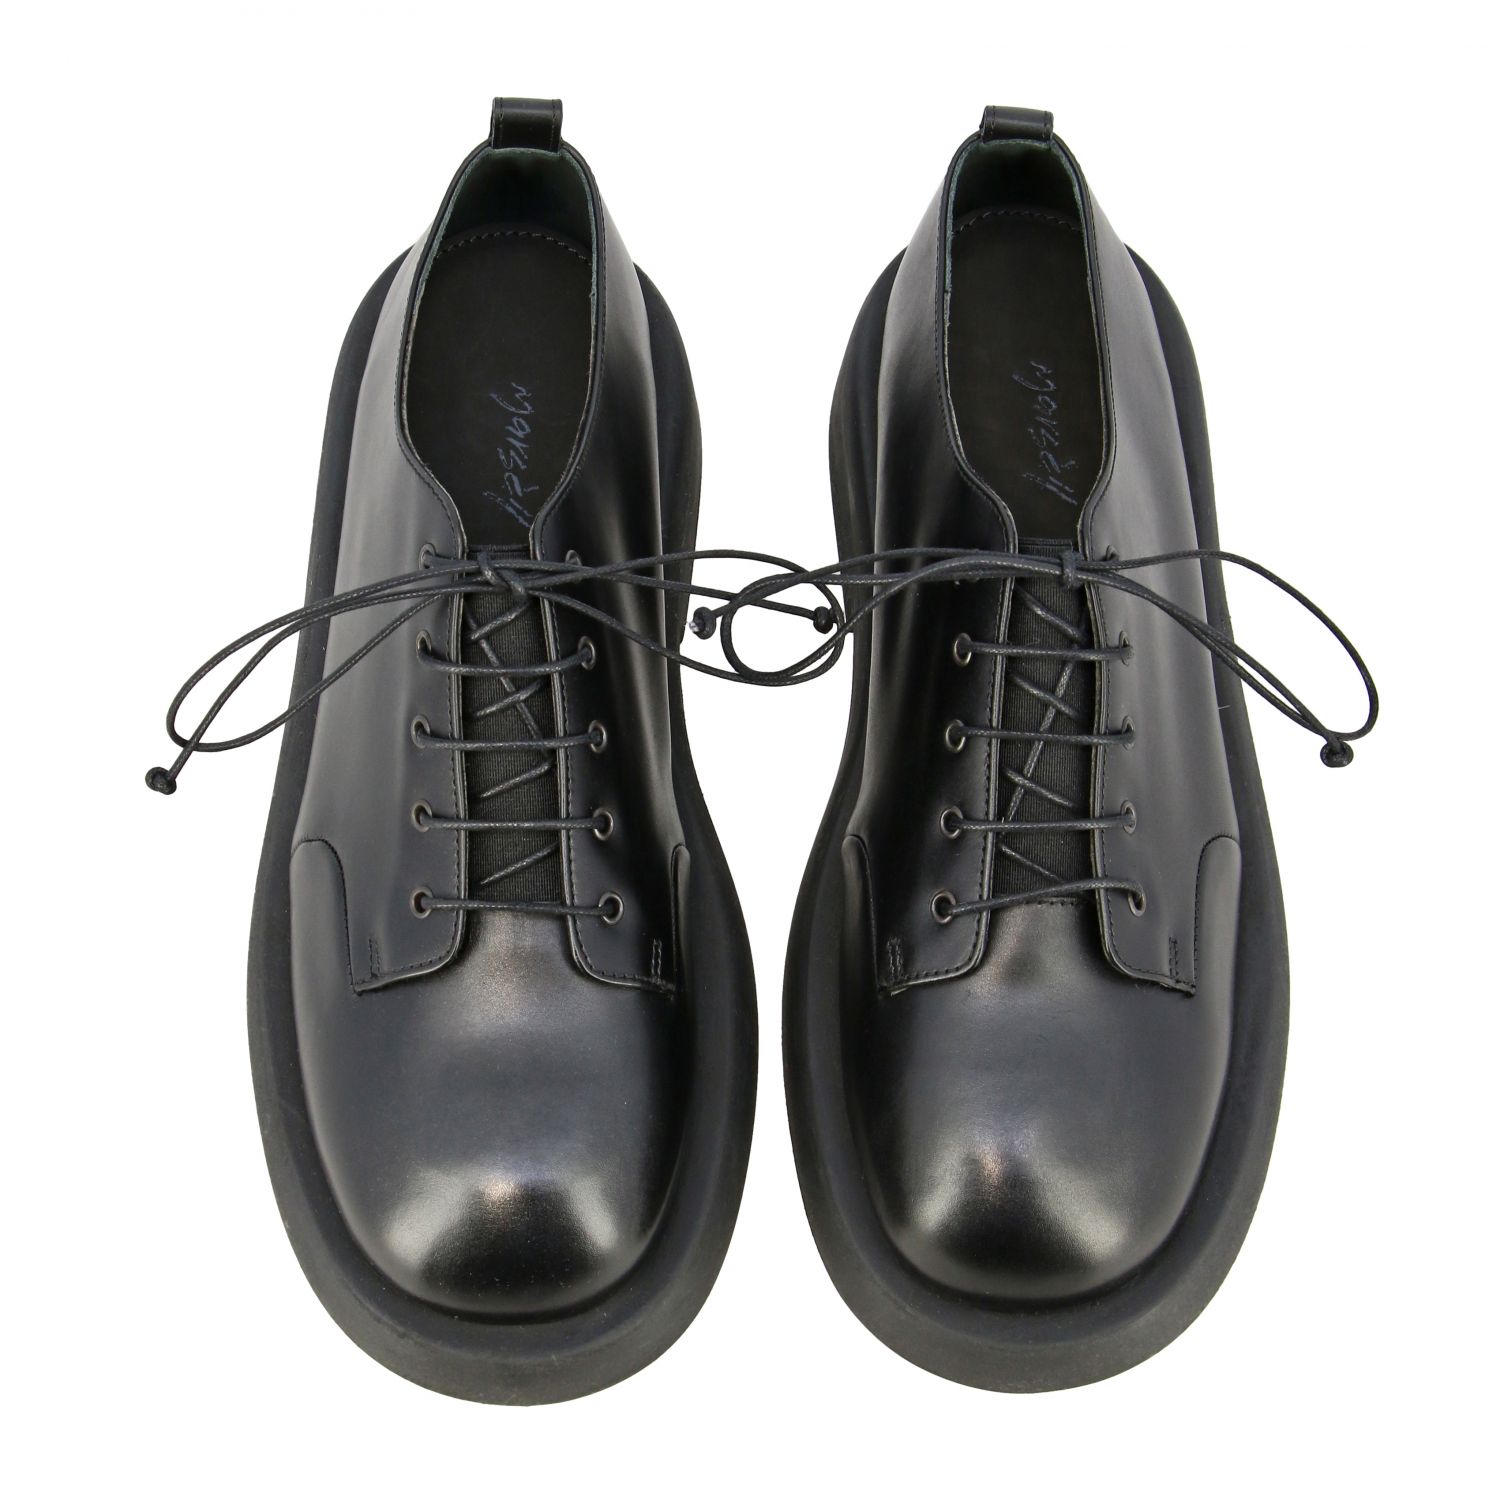 derby shoes rubber sole